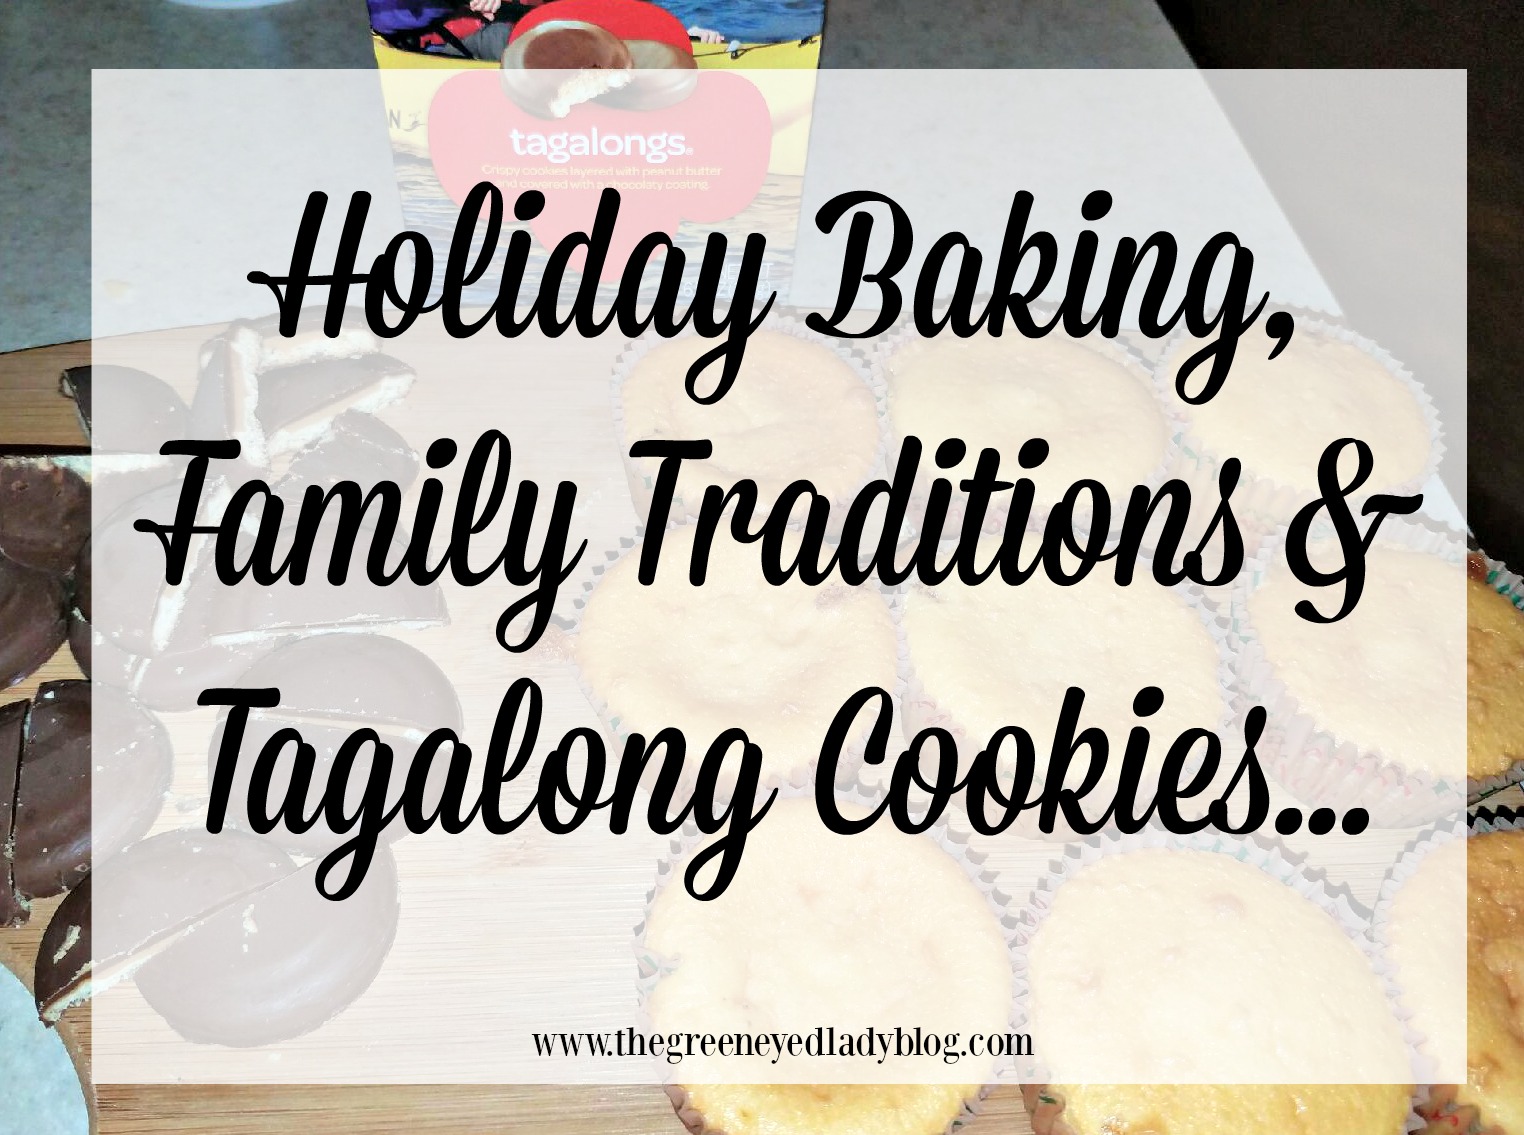 tagalongcookies-title